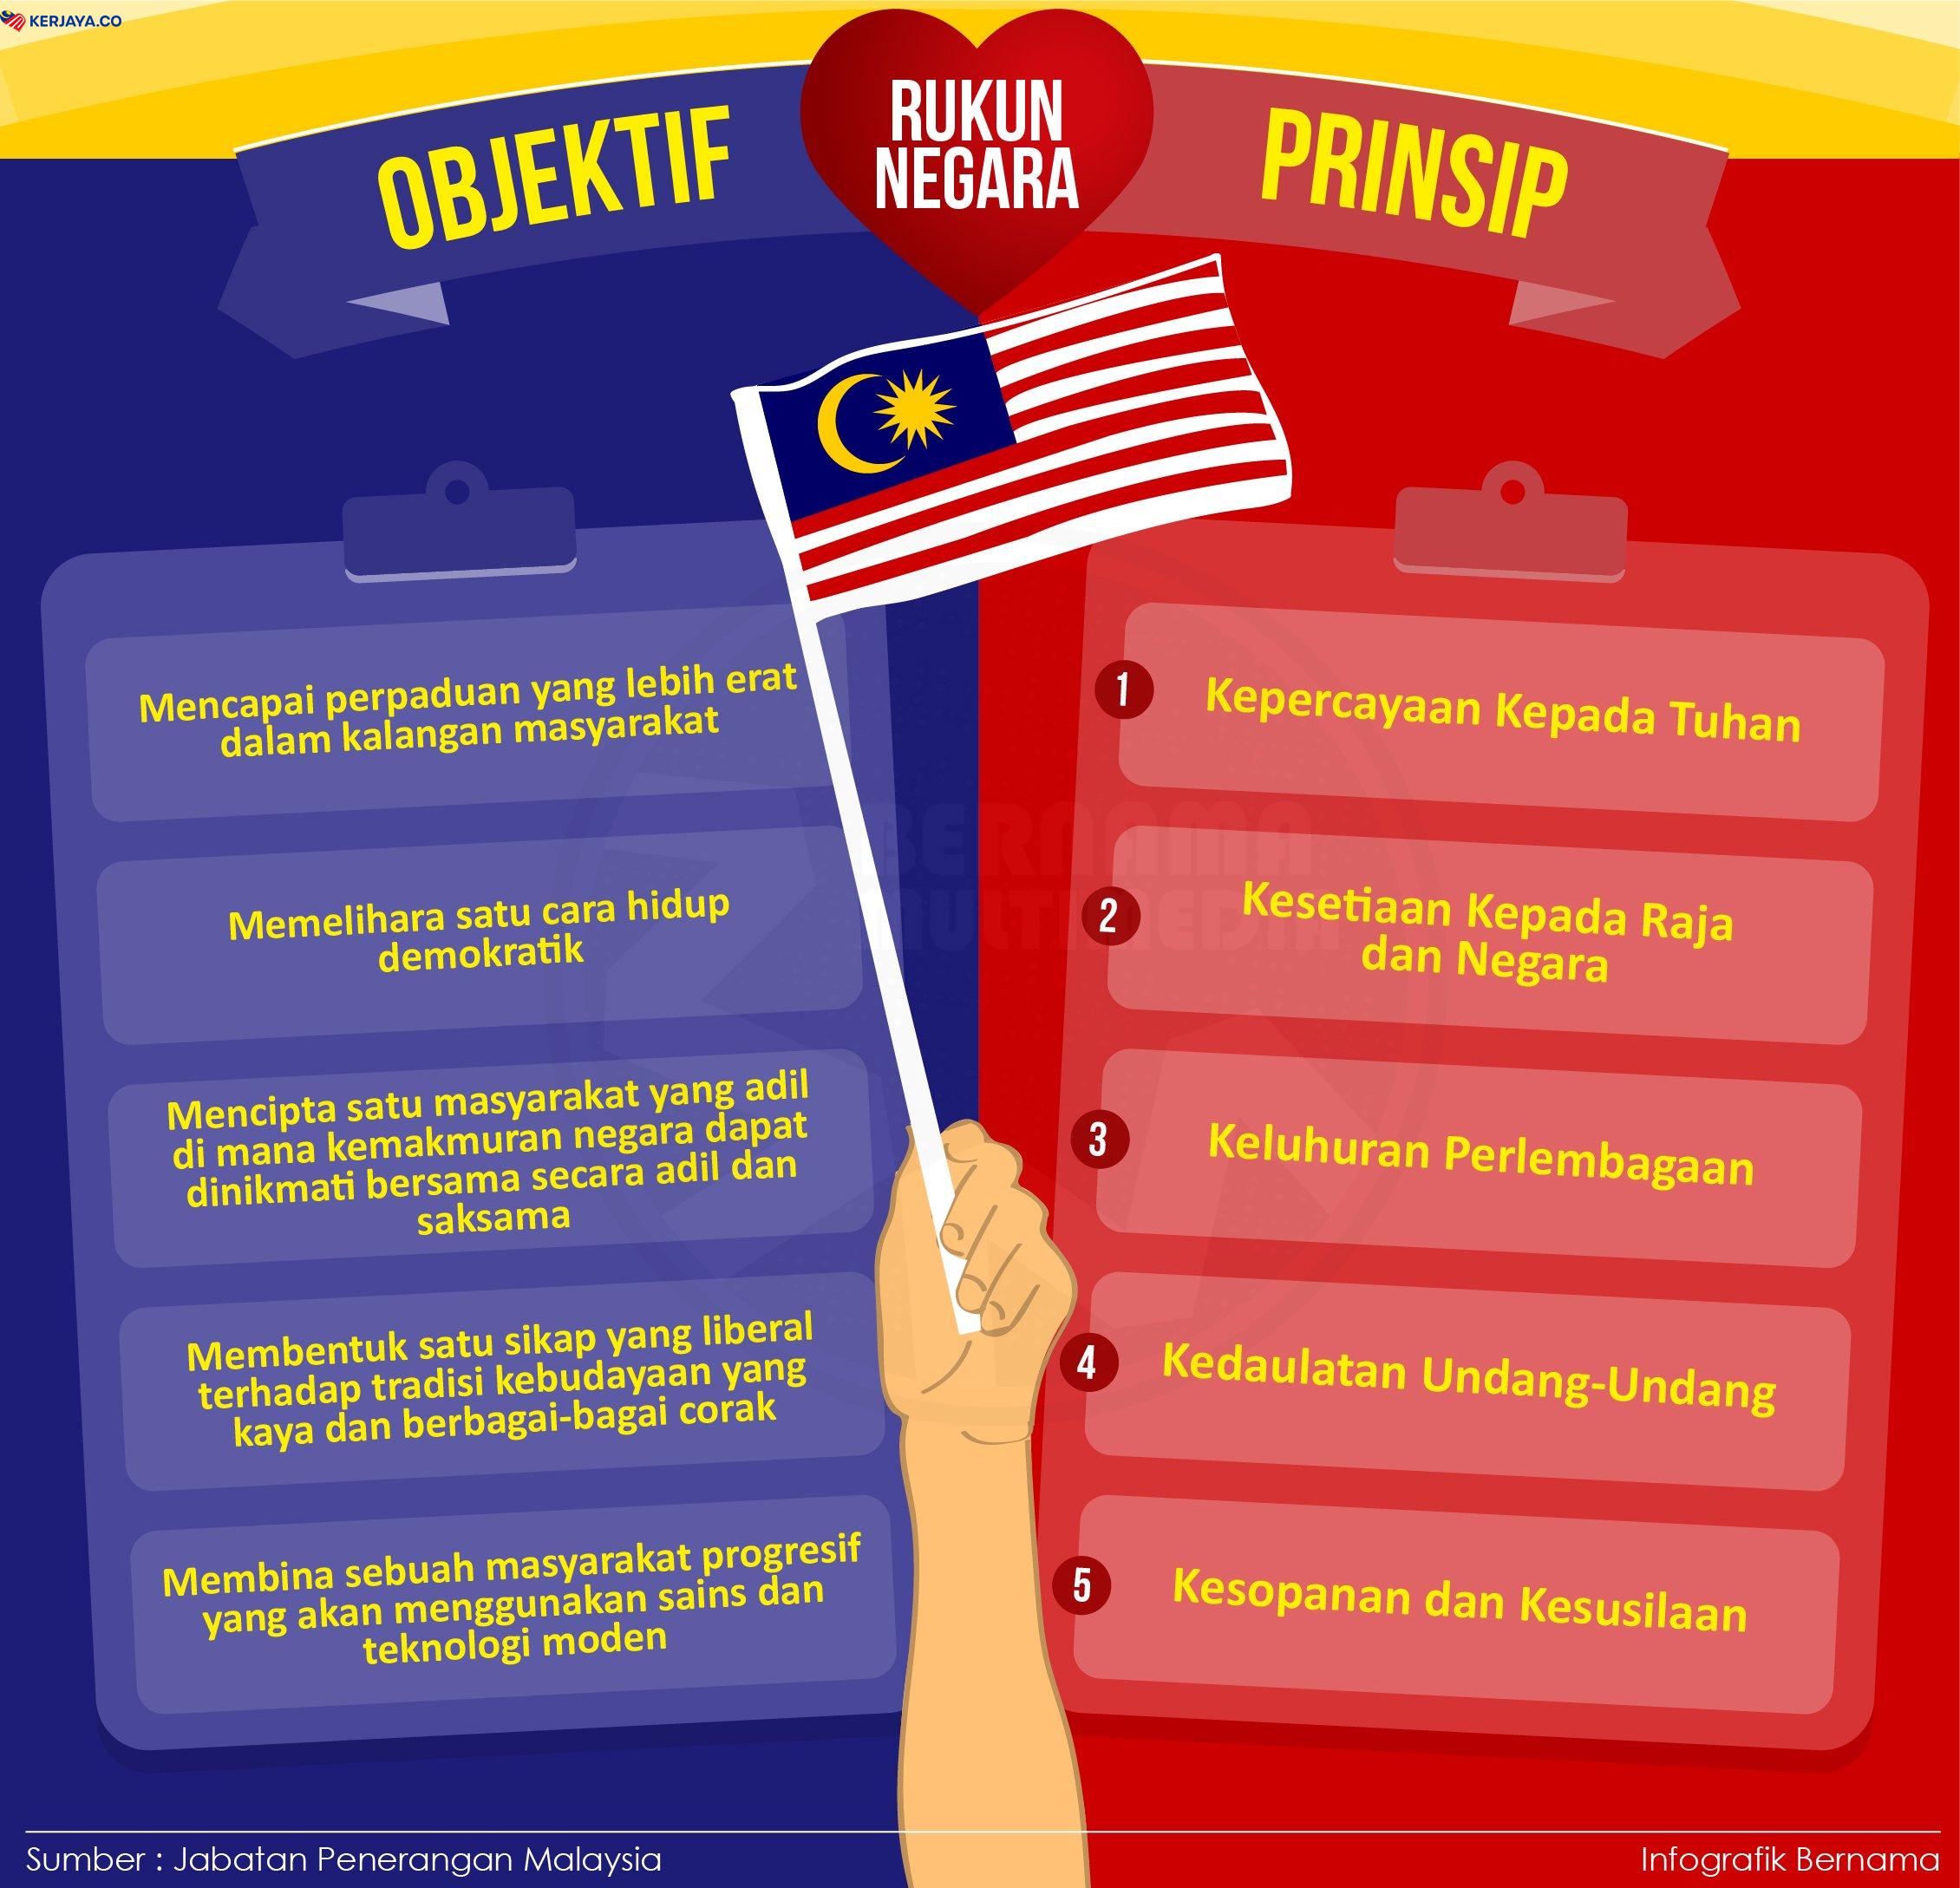 Apa Nak Jawab Jika Penemuduga Bertanyakan Anda Mengenai Rukun Negara Malaysia Kerja Kosong Kerajaan